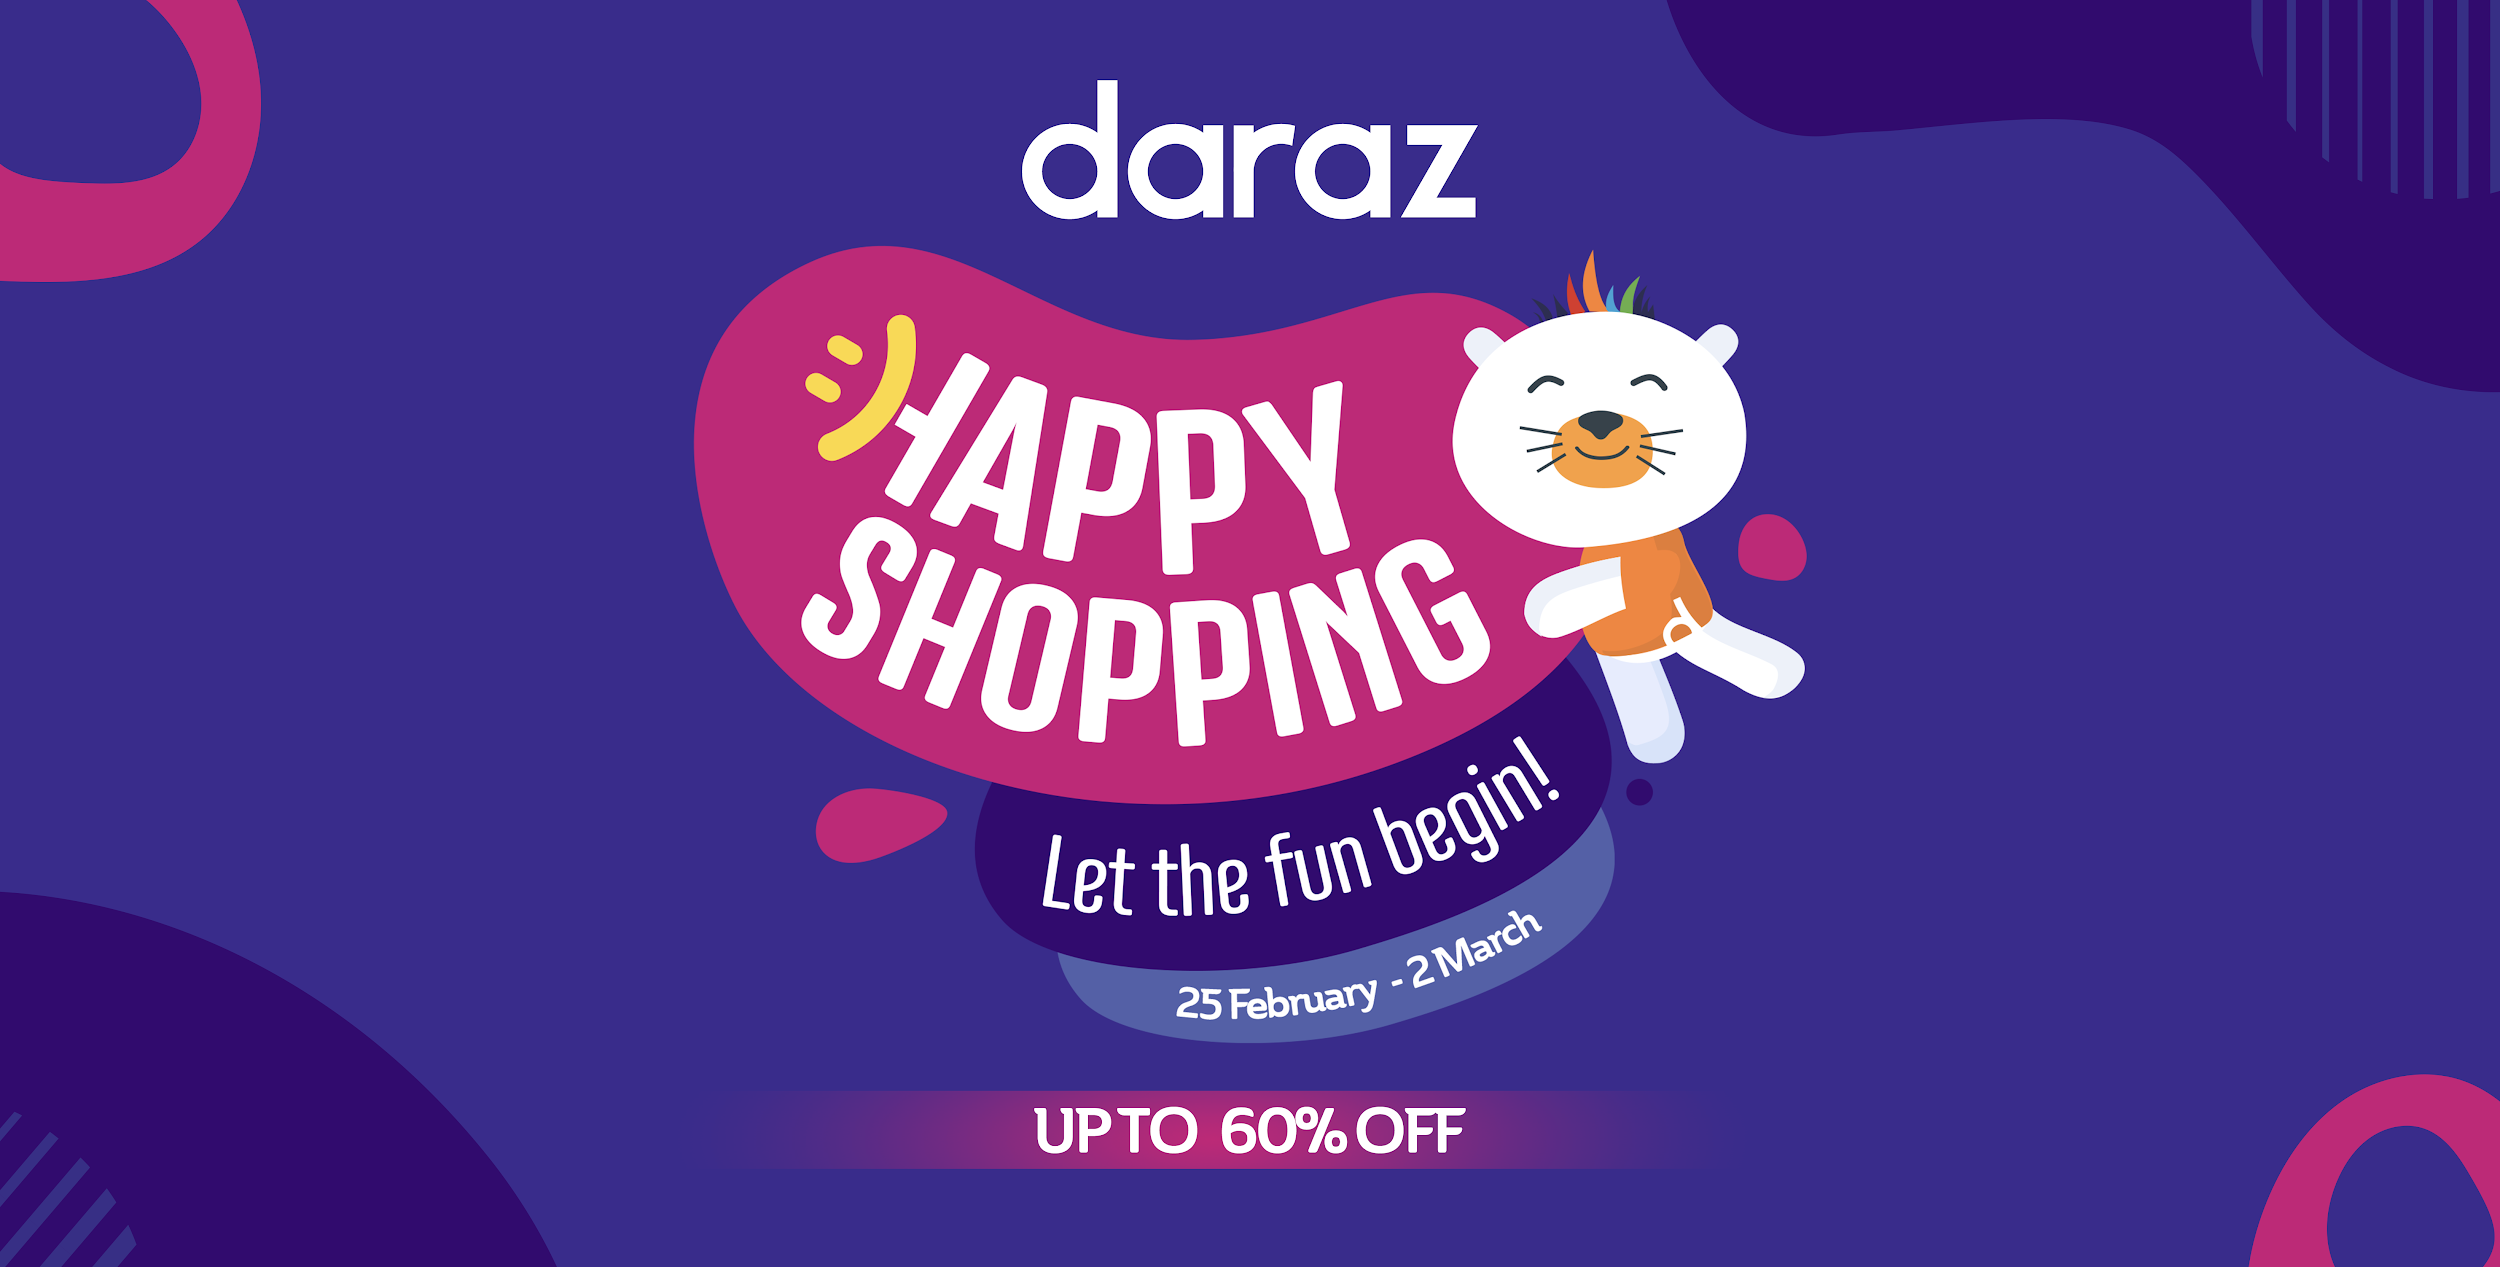 daraz-appy-shopping